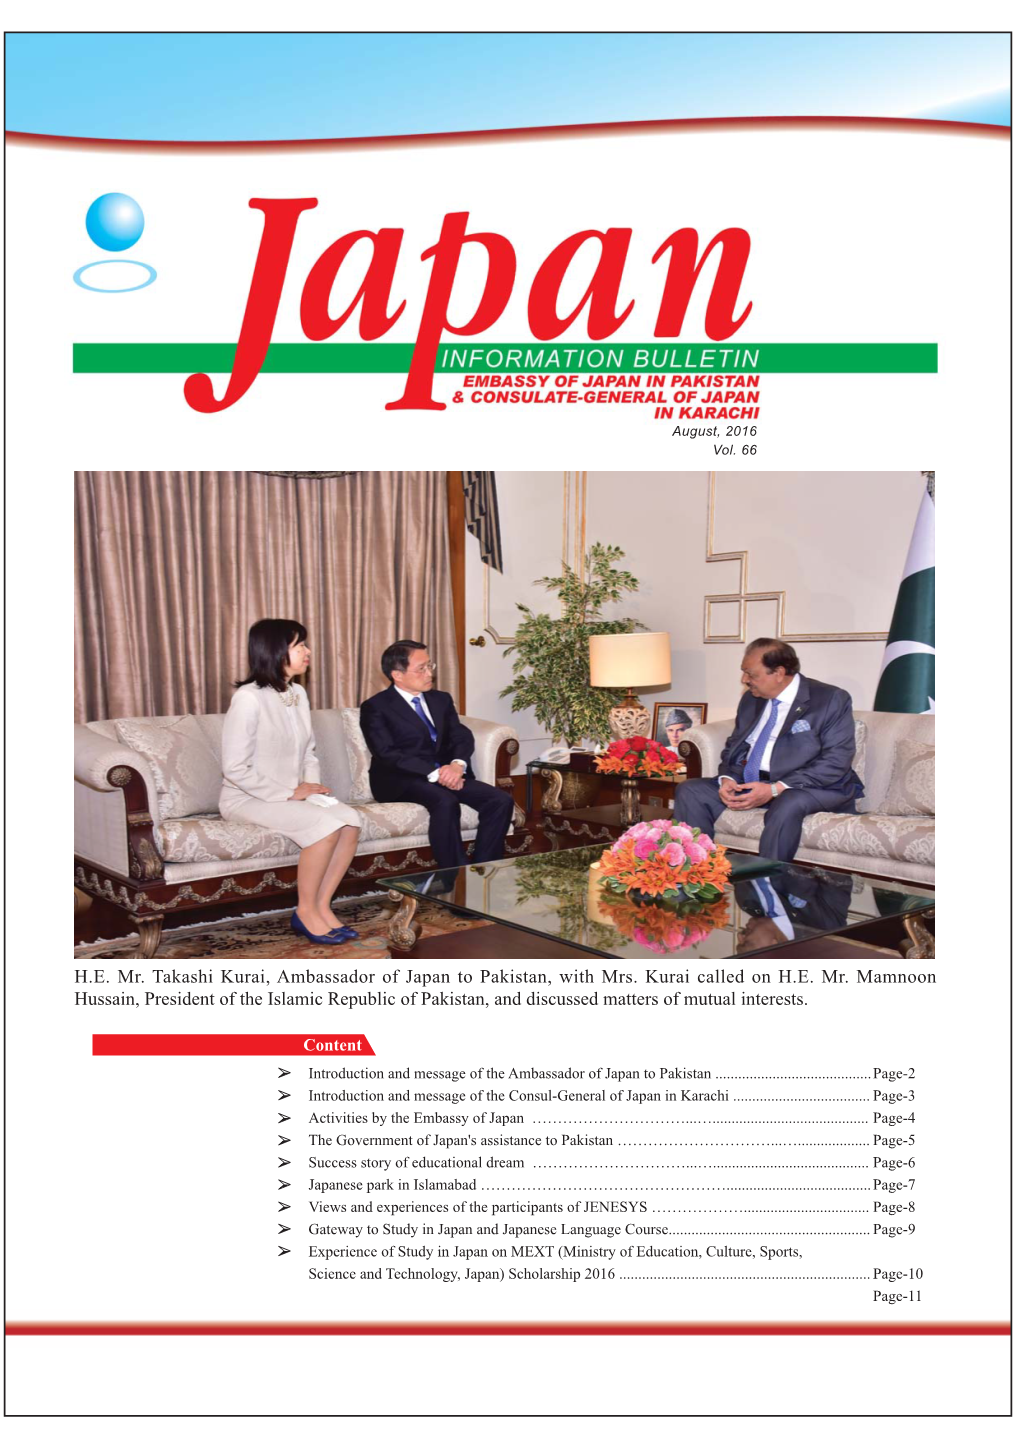 Japan Information Bulletin August 2016